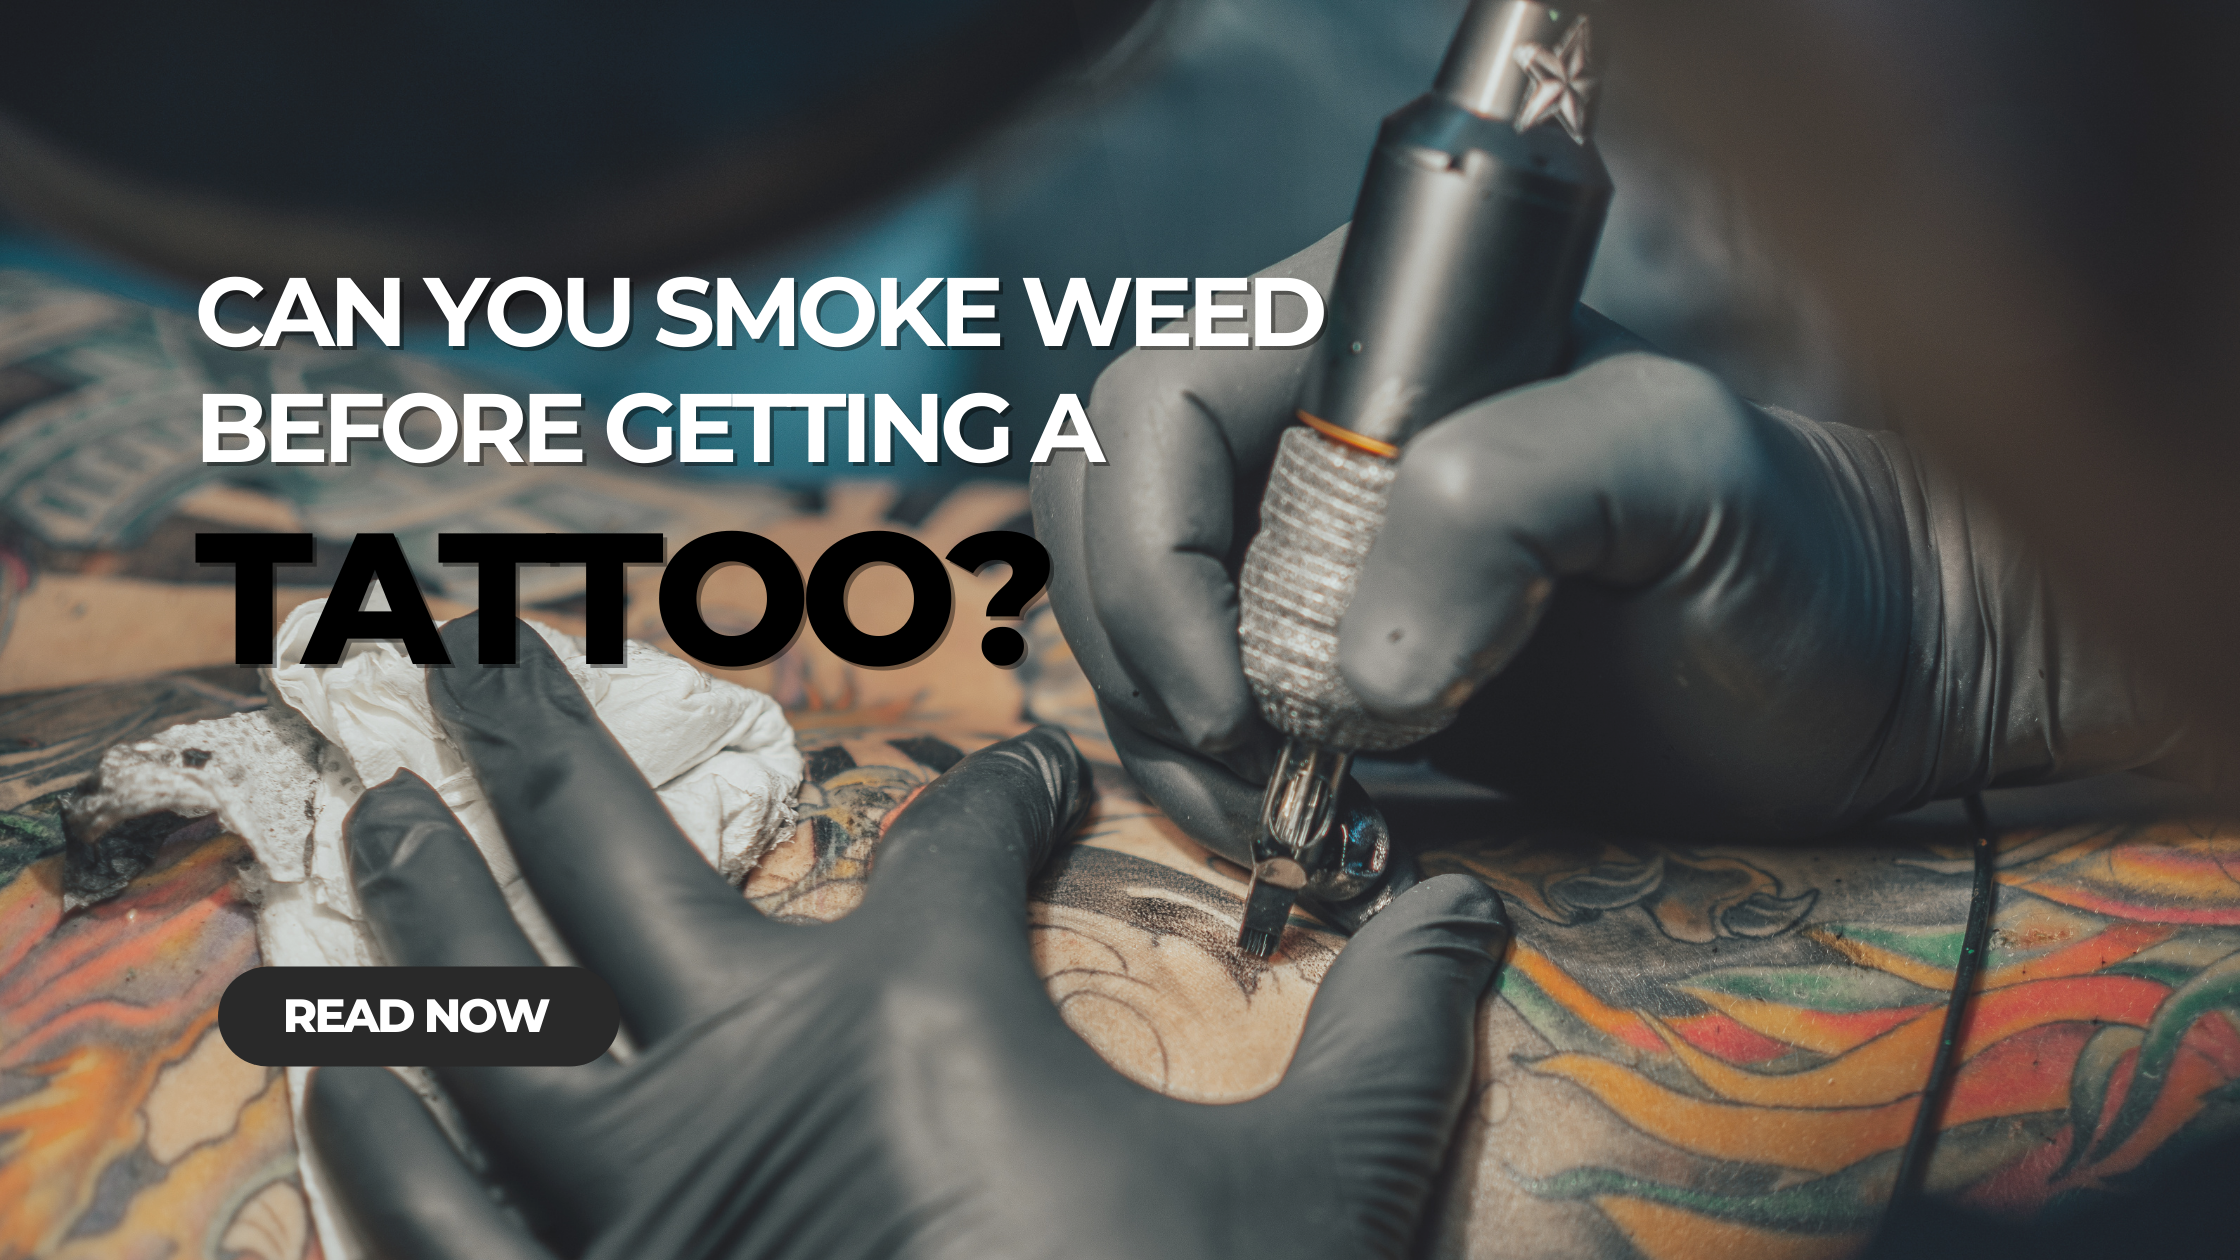 Can you smoke weed before a tattoo